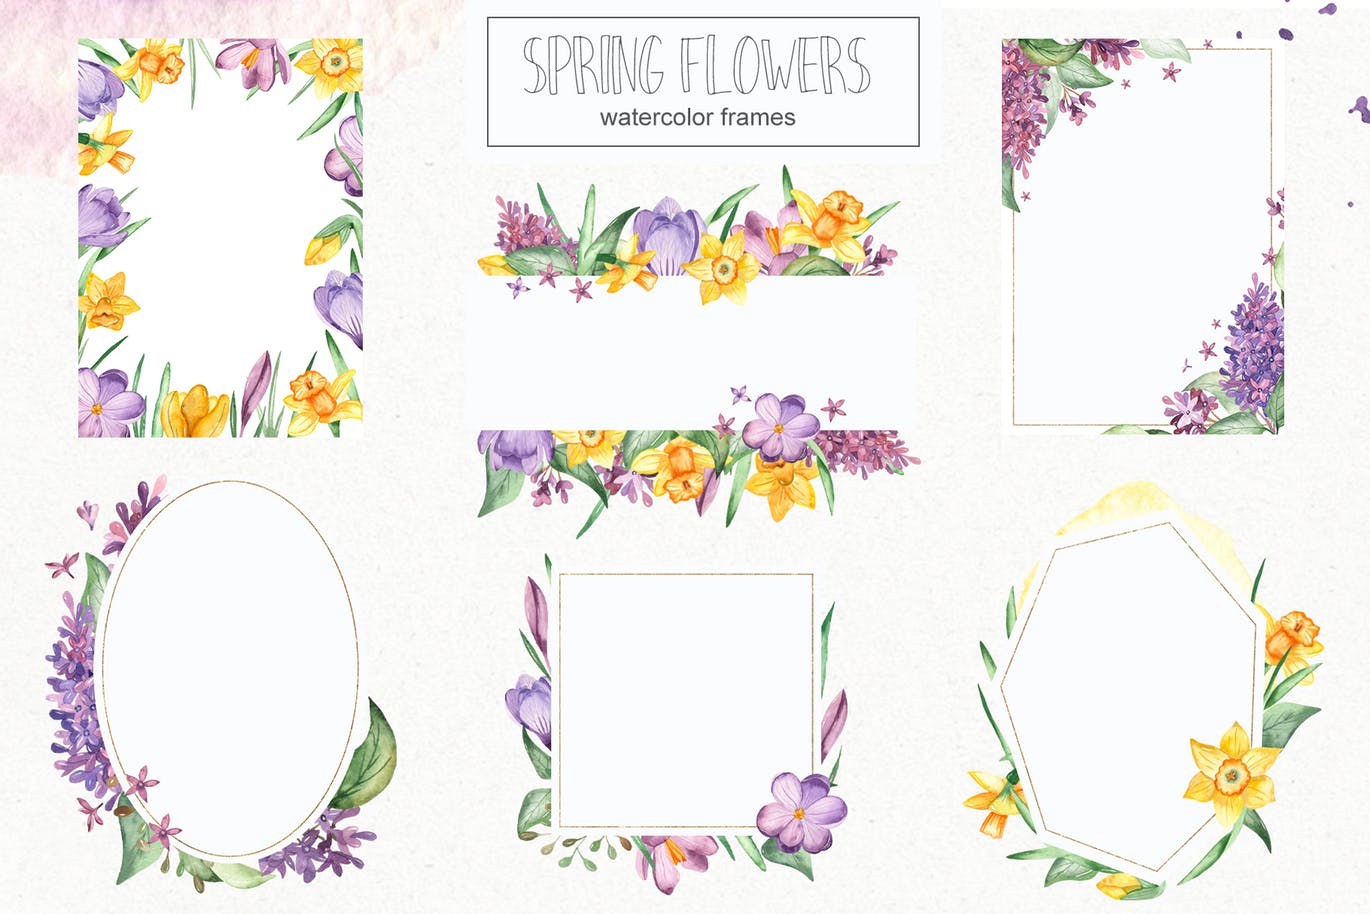 春季花卉水彩素材套装 Watercolor spring flowers collection插图(3)